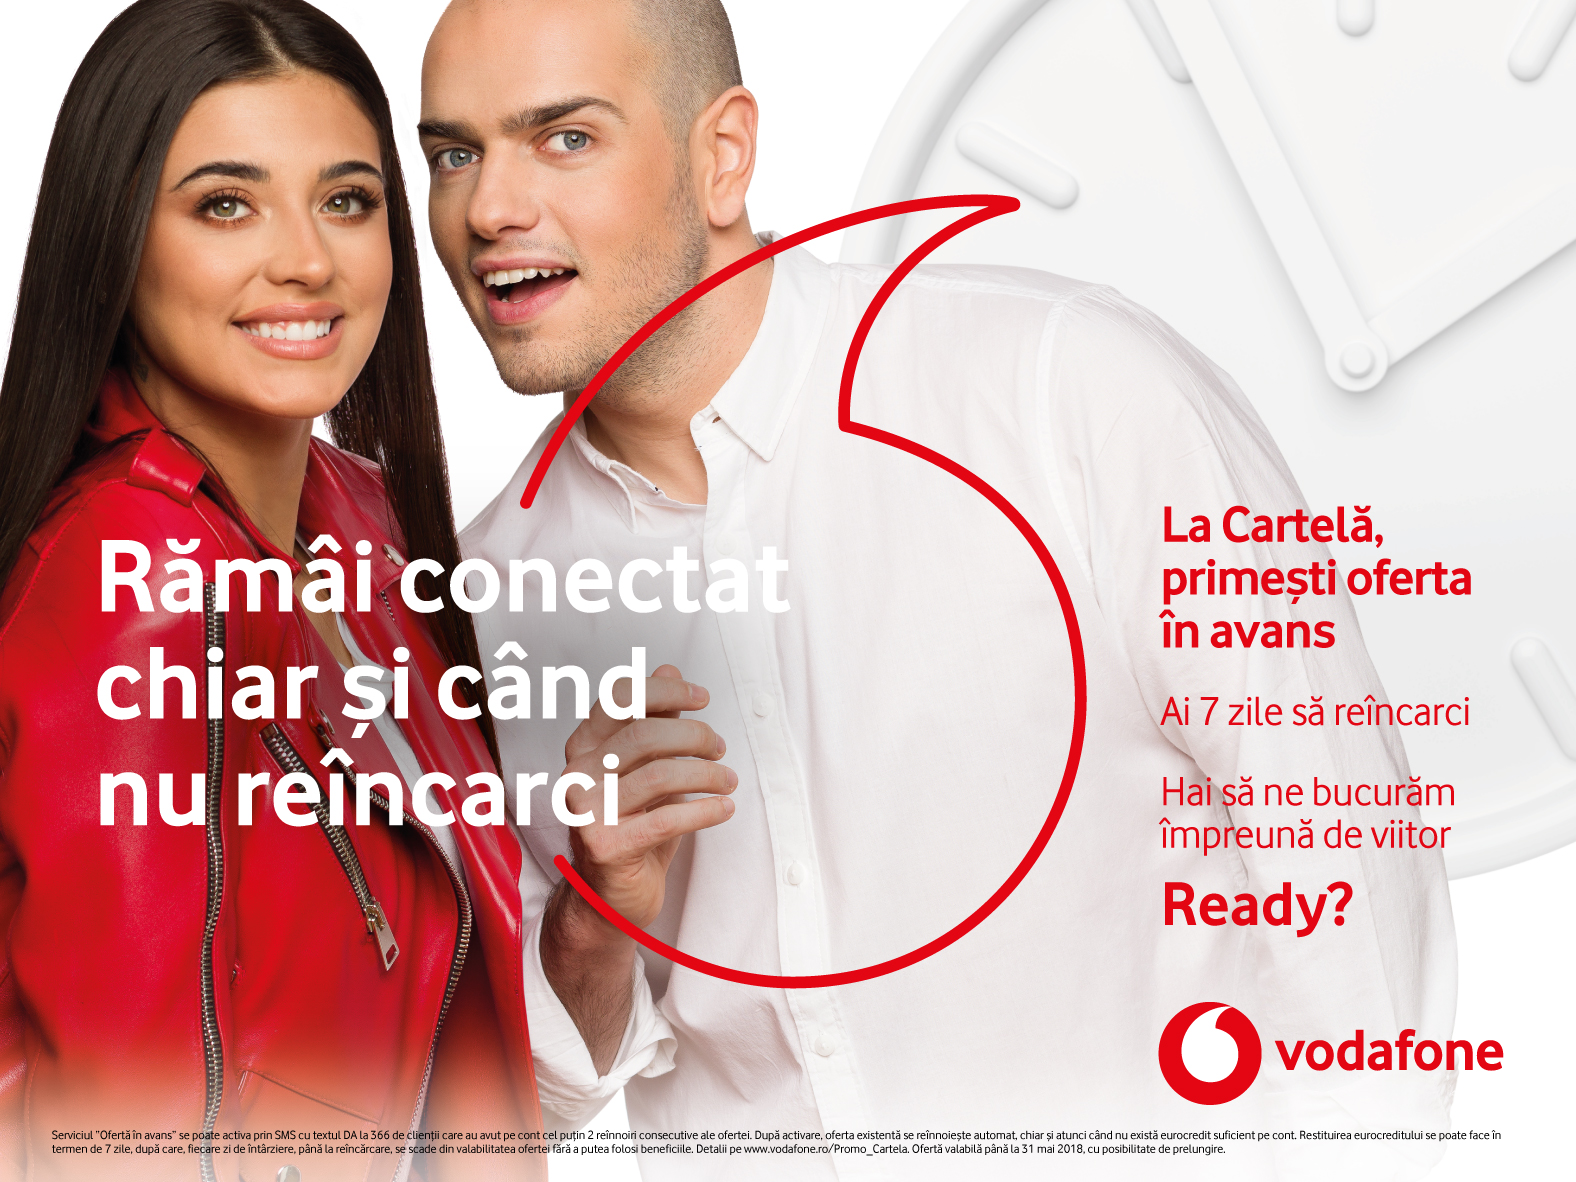 Utilizatorii Cartelei Vodafone pot ramane conectati chiar daca nu au credit suficient pe cont, prin noul serviciu gratuit Oferta in avans